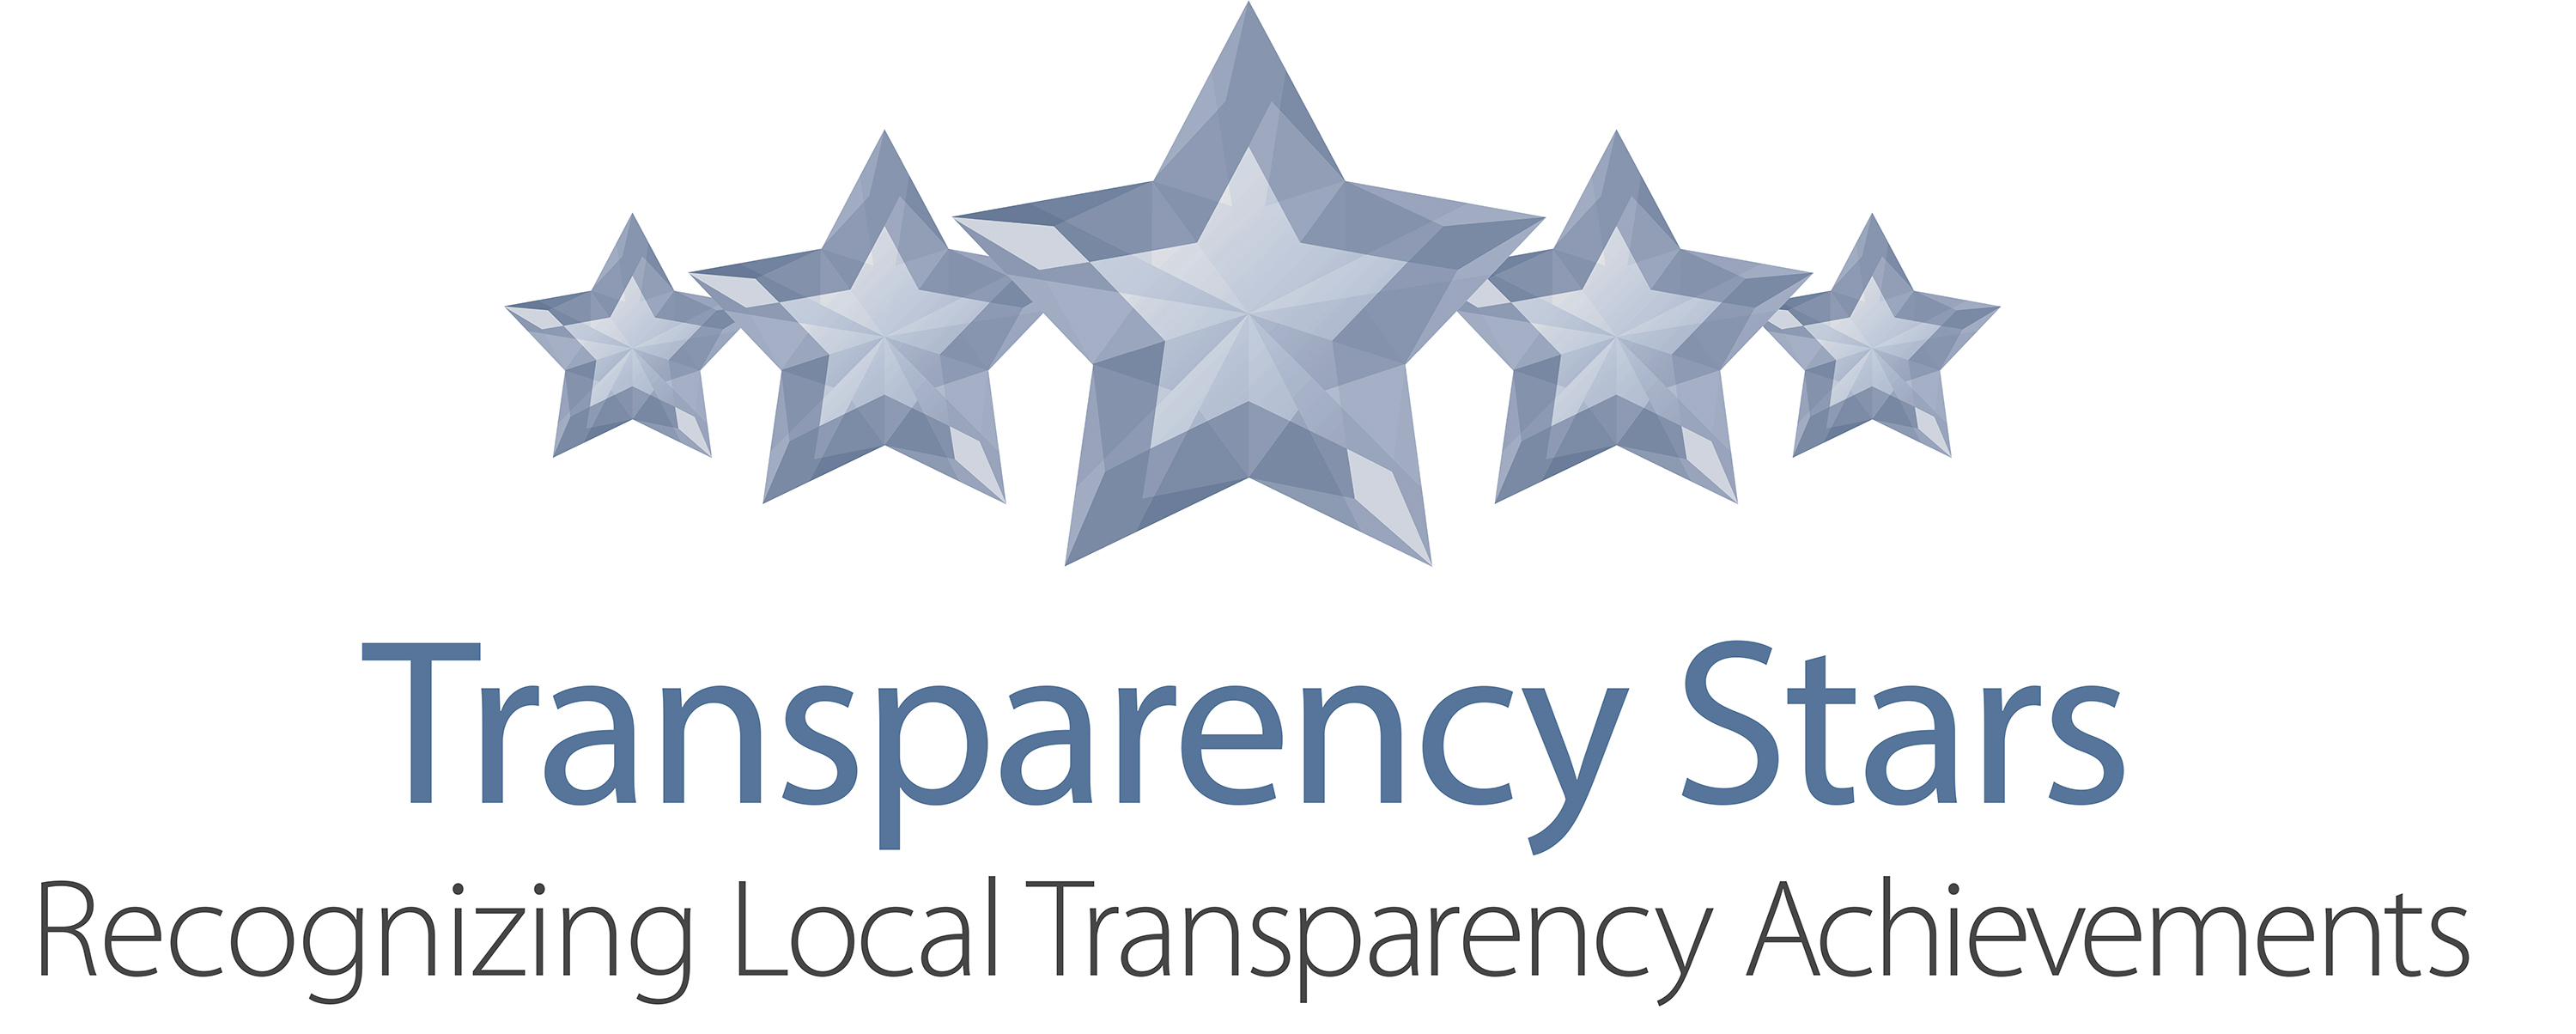 TransparencyStars_wTag